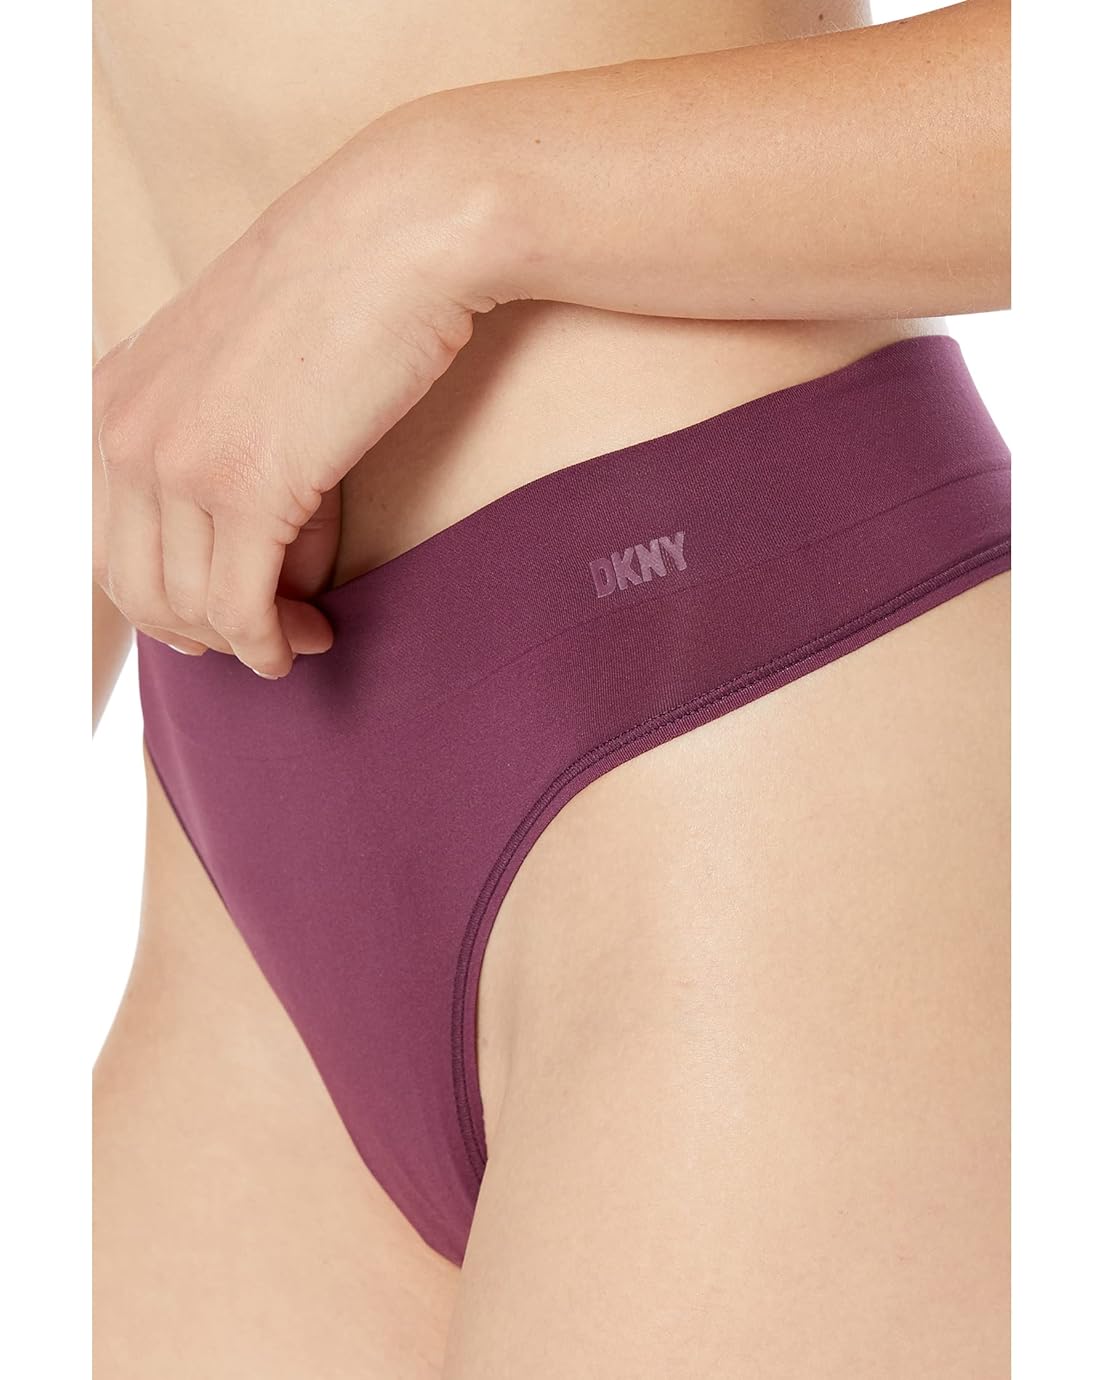 DKNY DKNY Intimates Seamless Litewear Thong